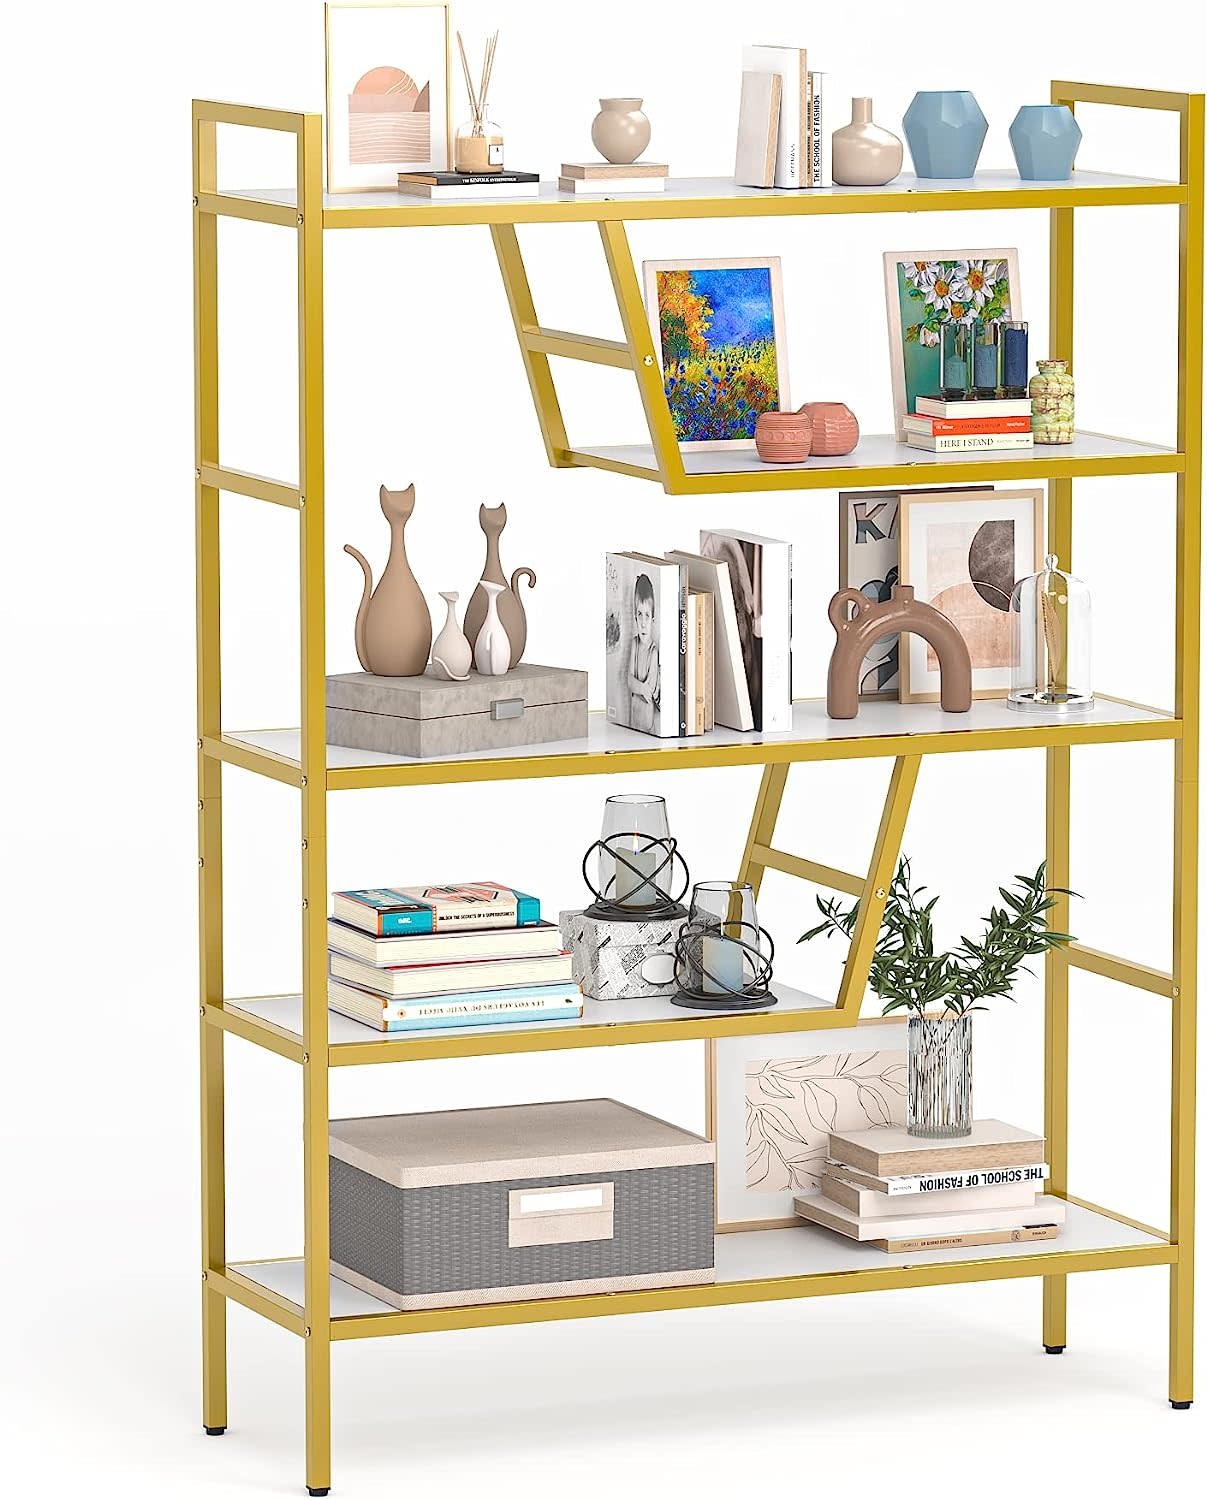 NUMENN 5 Tier Bookshelf, Tall Bookcase Shelf Storage Organizer